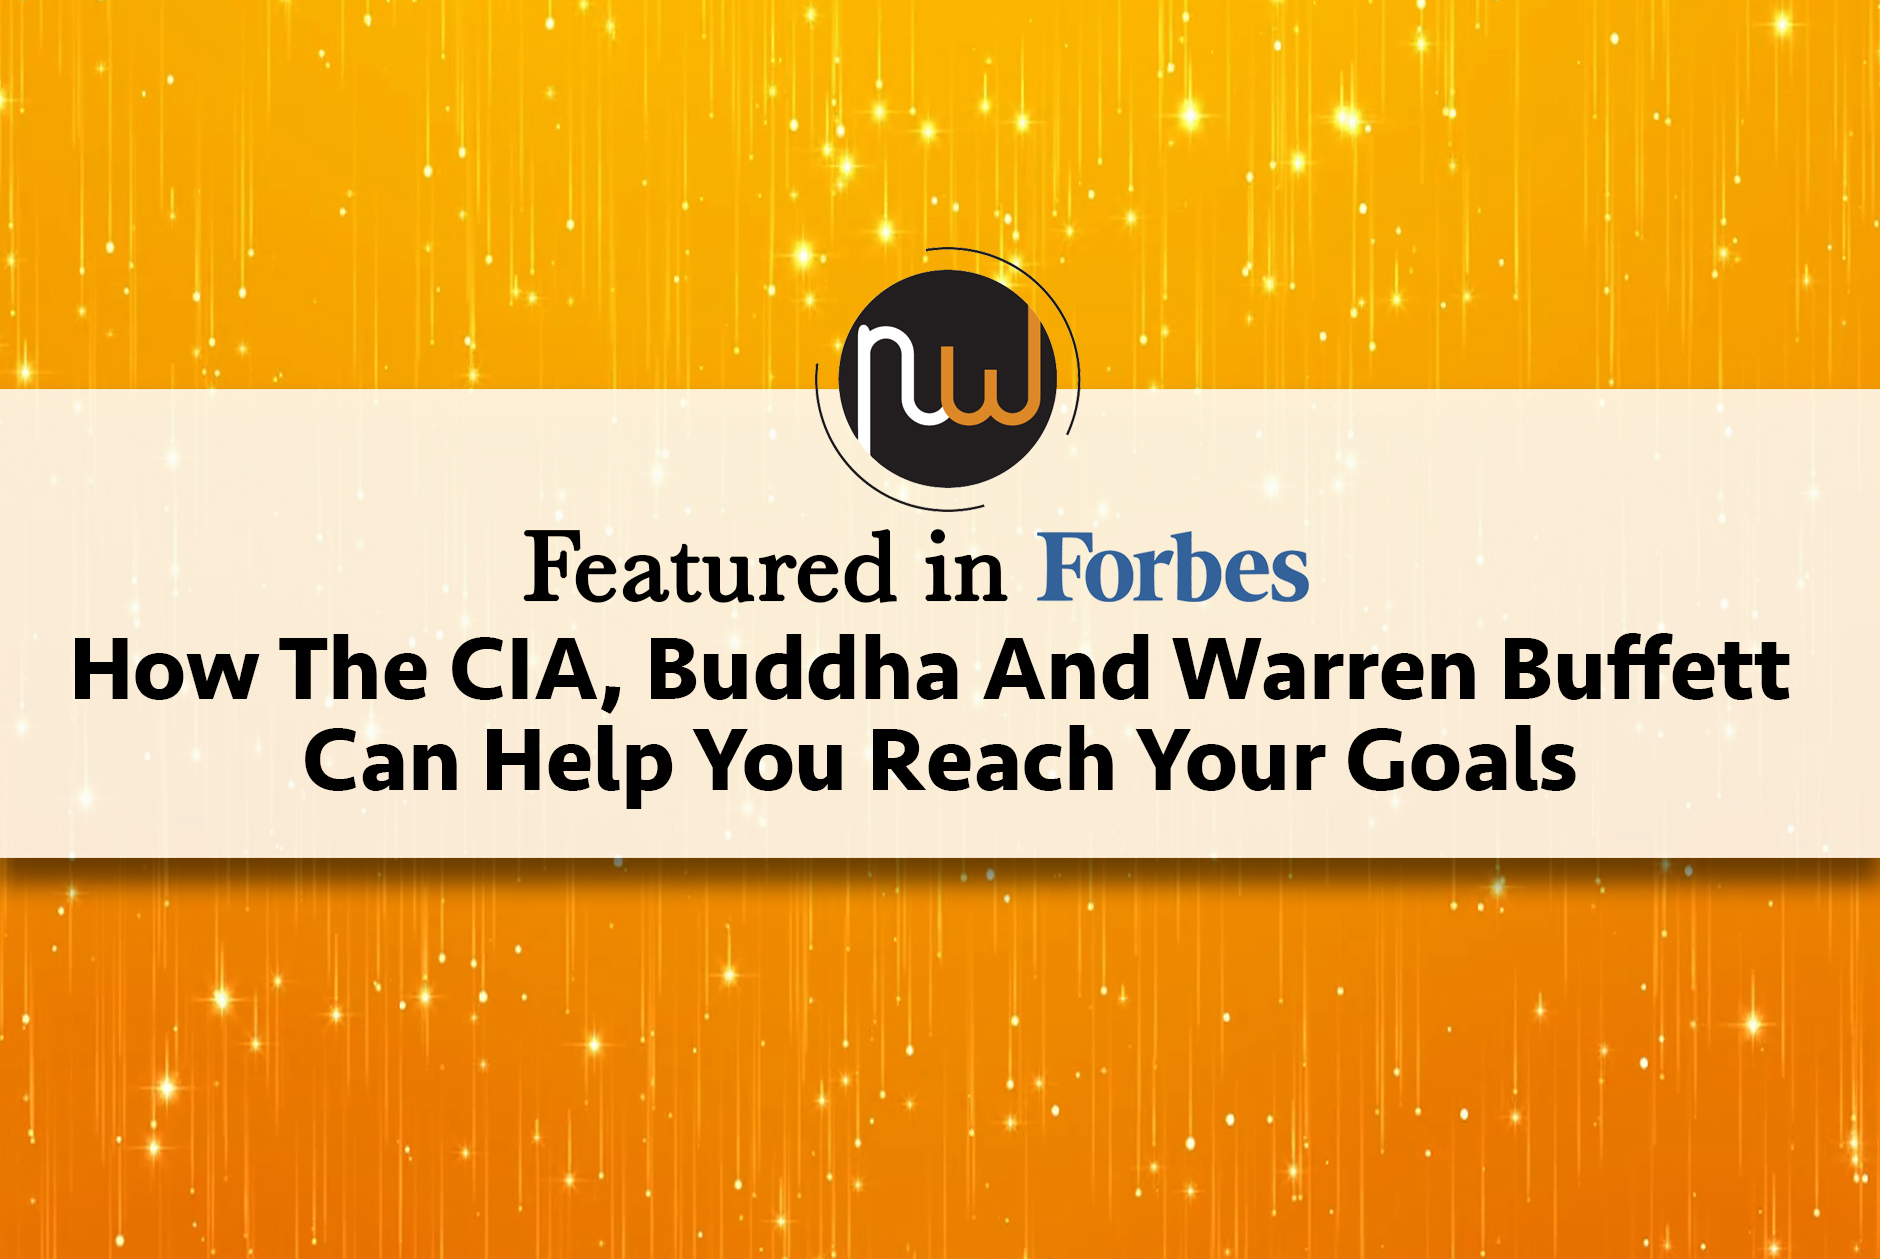 Reaching Goals: The CIA, Buddha, And Warren Buffett Can Help